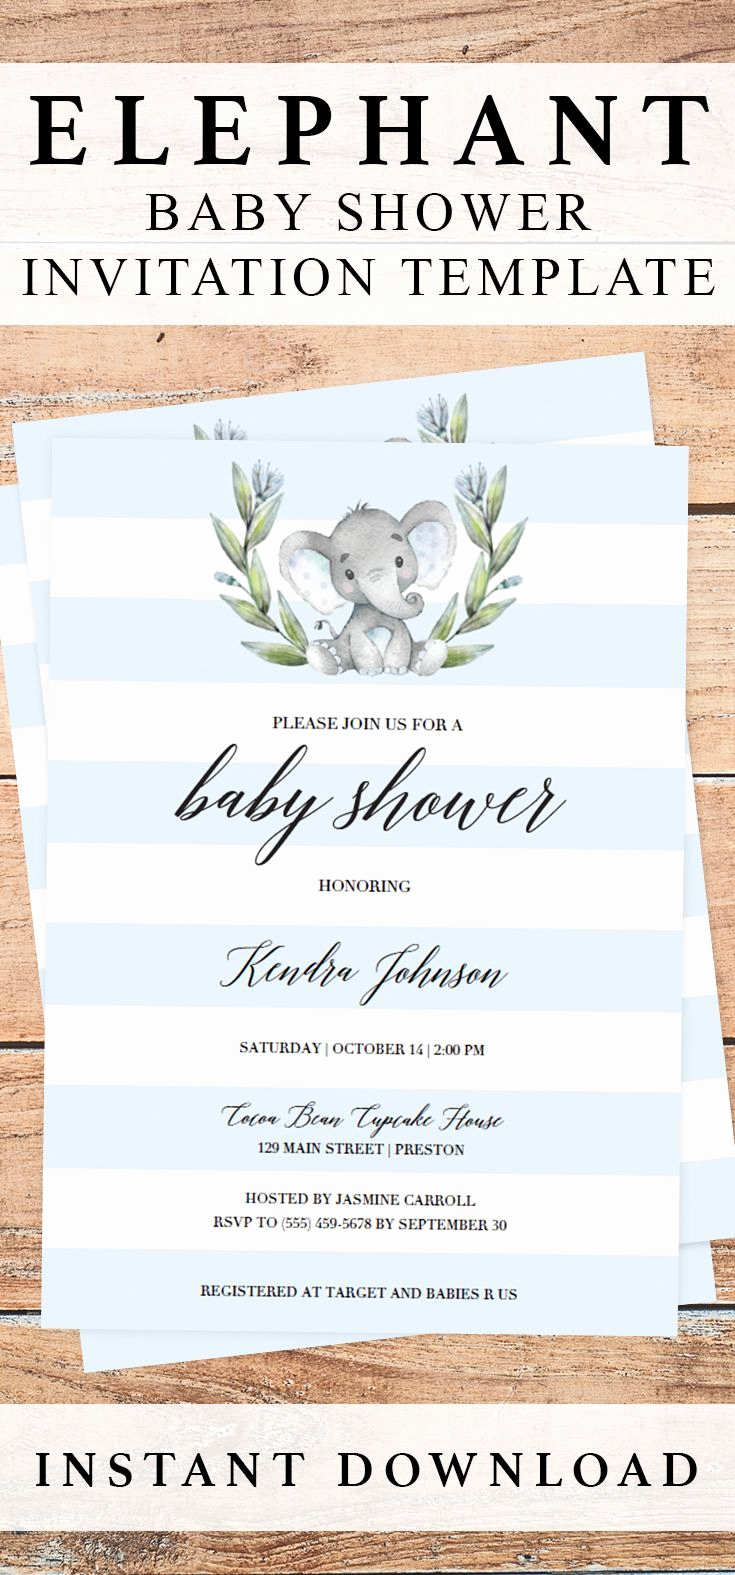 Baby Shower Invitation Template Fresh Best 25 Baby Shower Templates Ideas On Pinterest